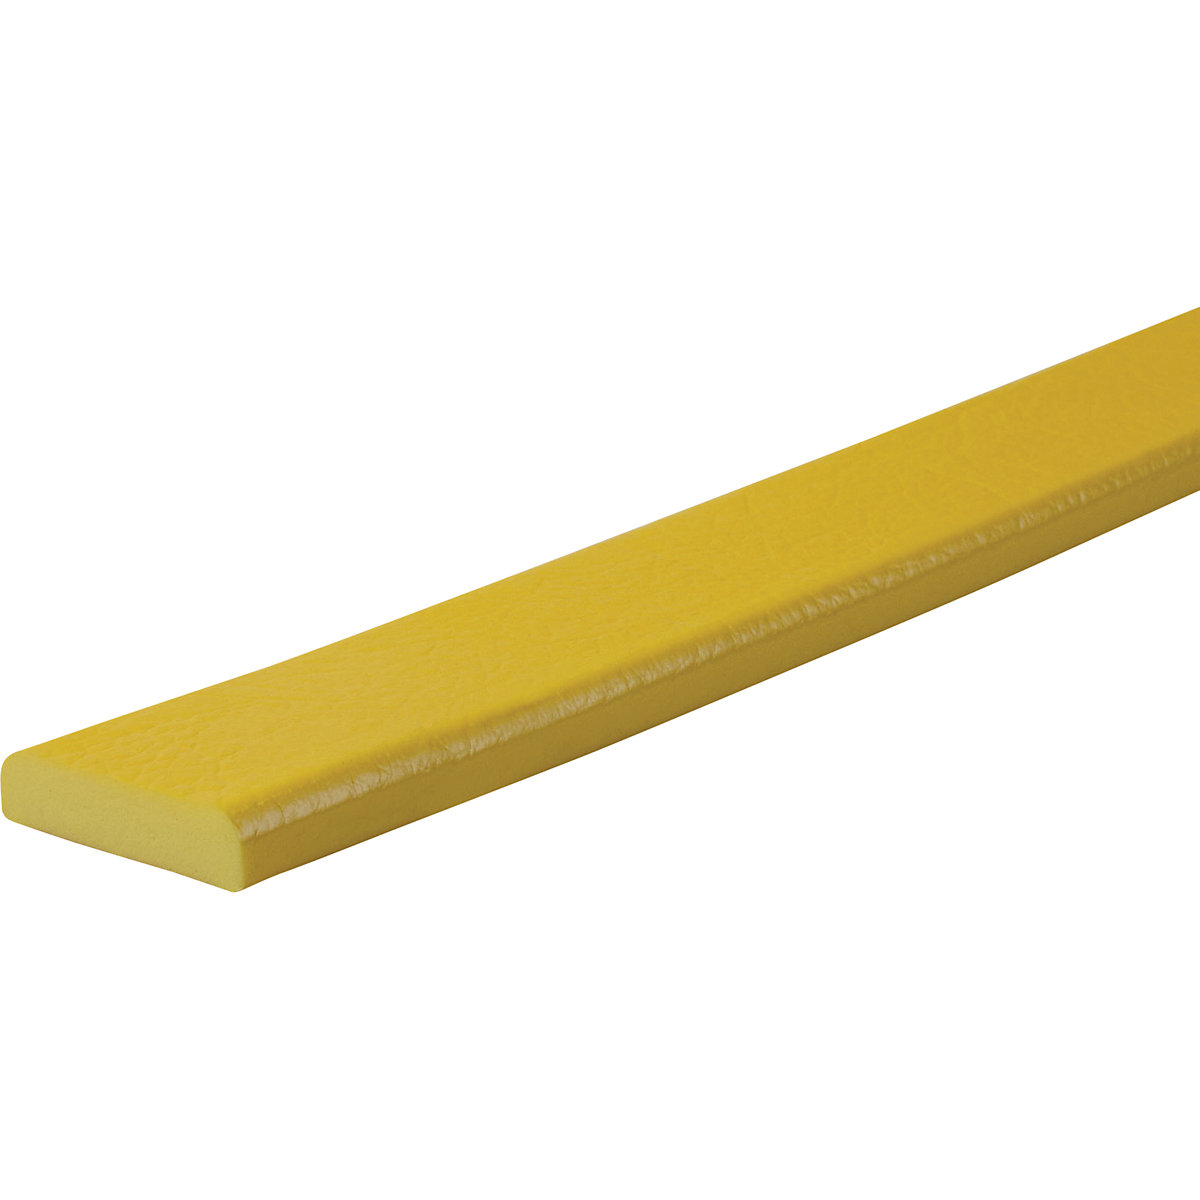 Knuffi®-oppervlaktebescherming – SHG, type F, stuk van 1 m, geel-24